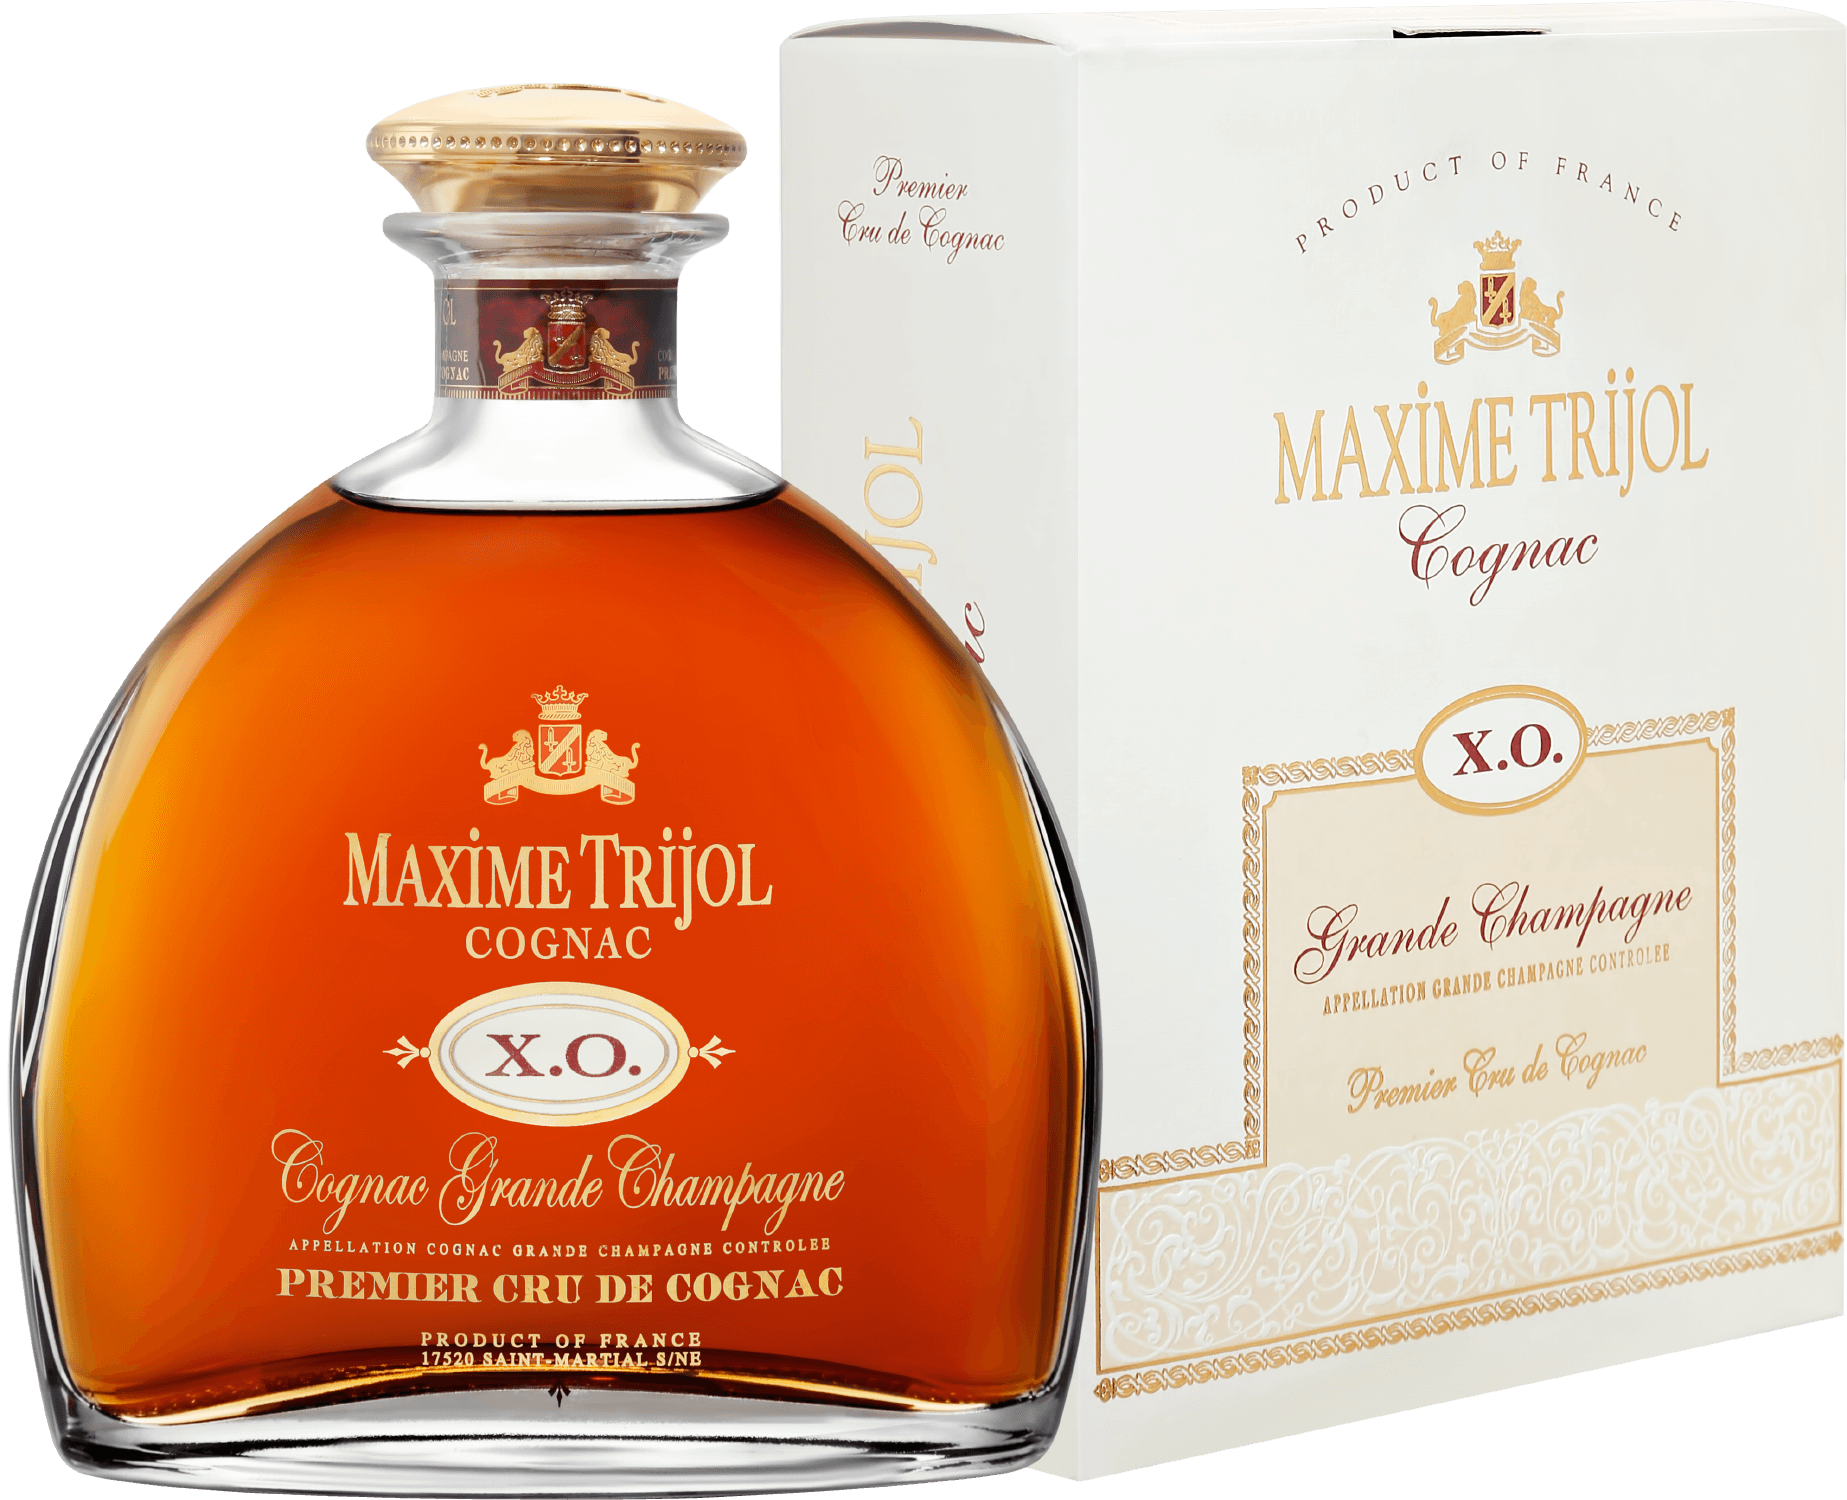 Maxime Trijol Cognac XO Grande Champagne Premier Cru (gift box)